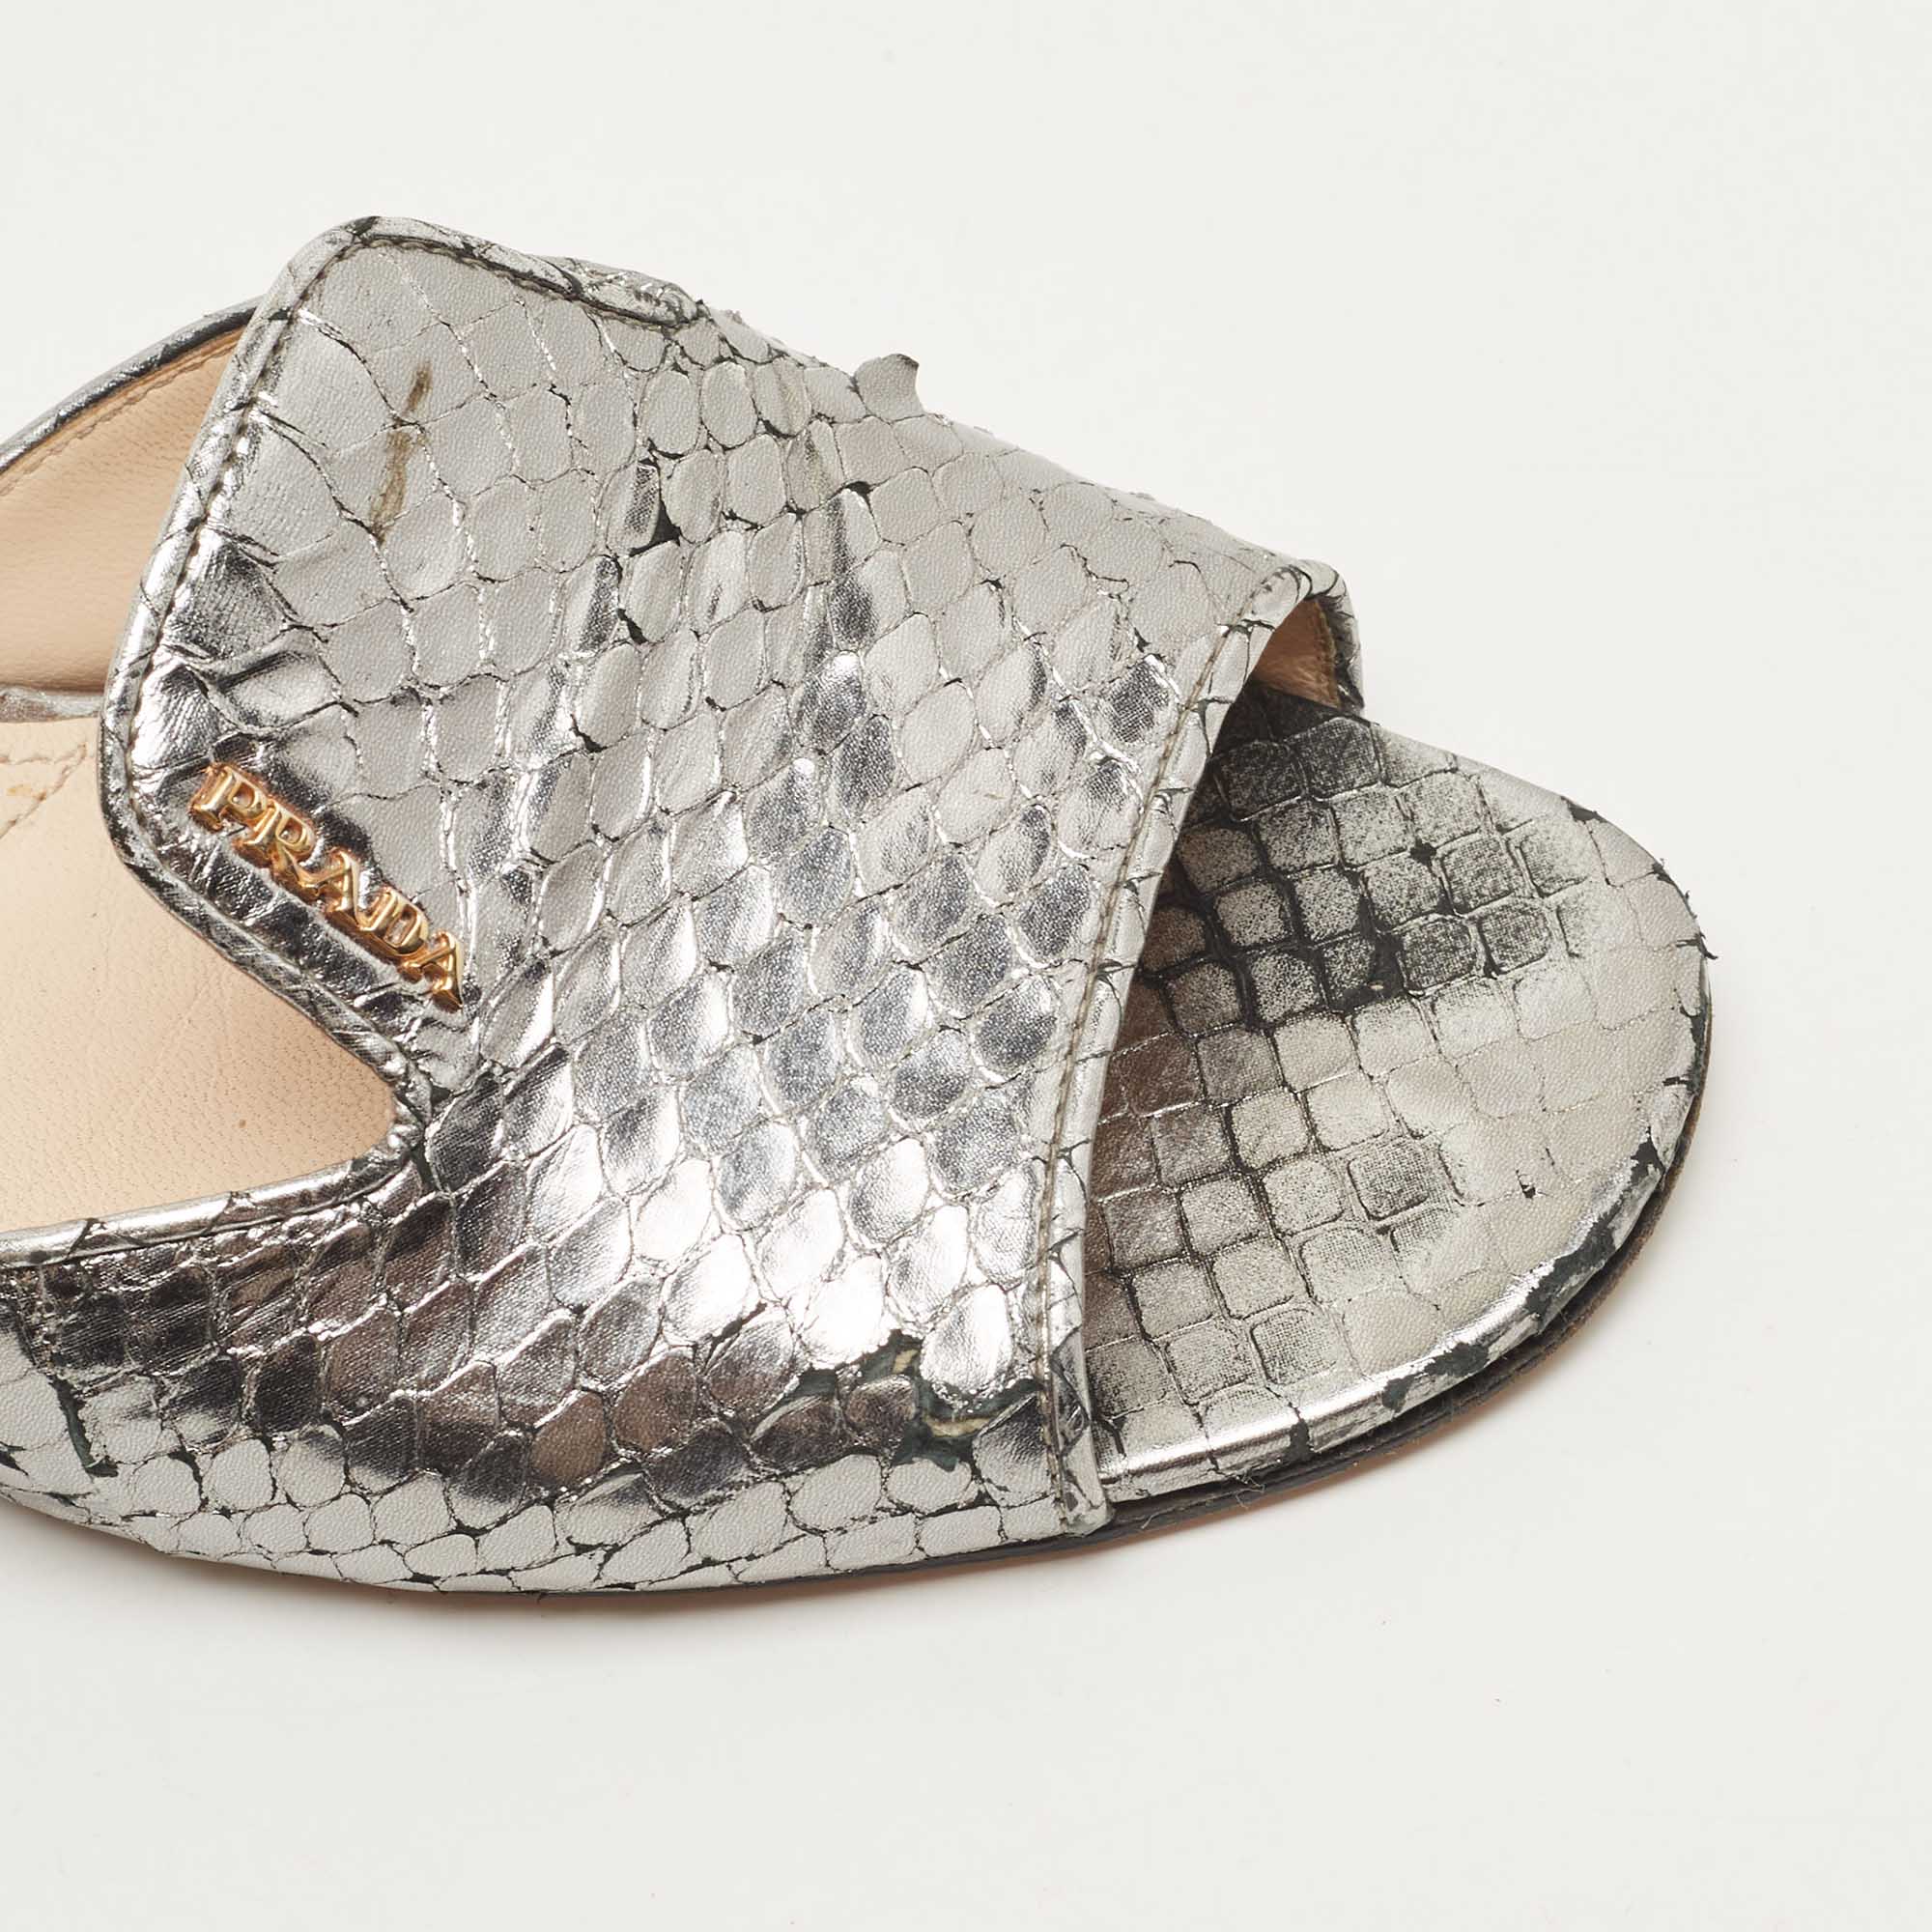 Prada Metallic Grey Python Embossed Leather Slide Sandals Size 37